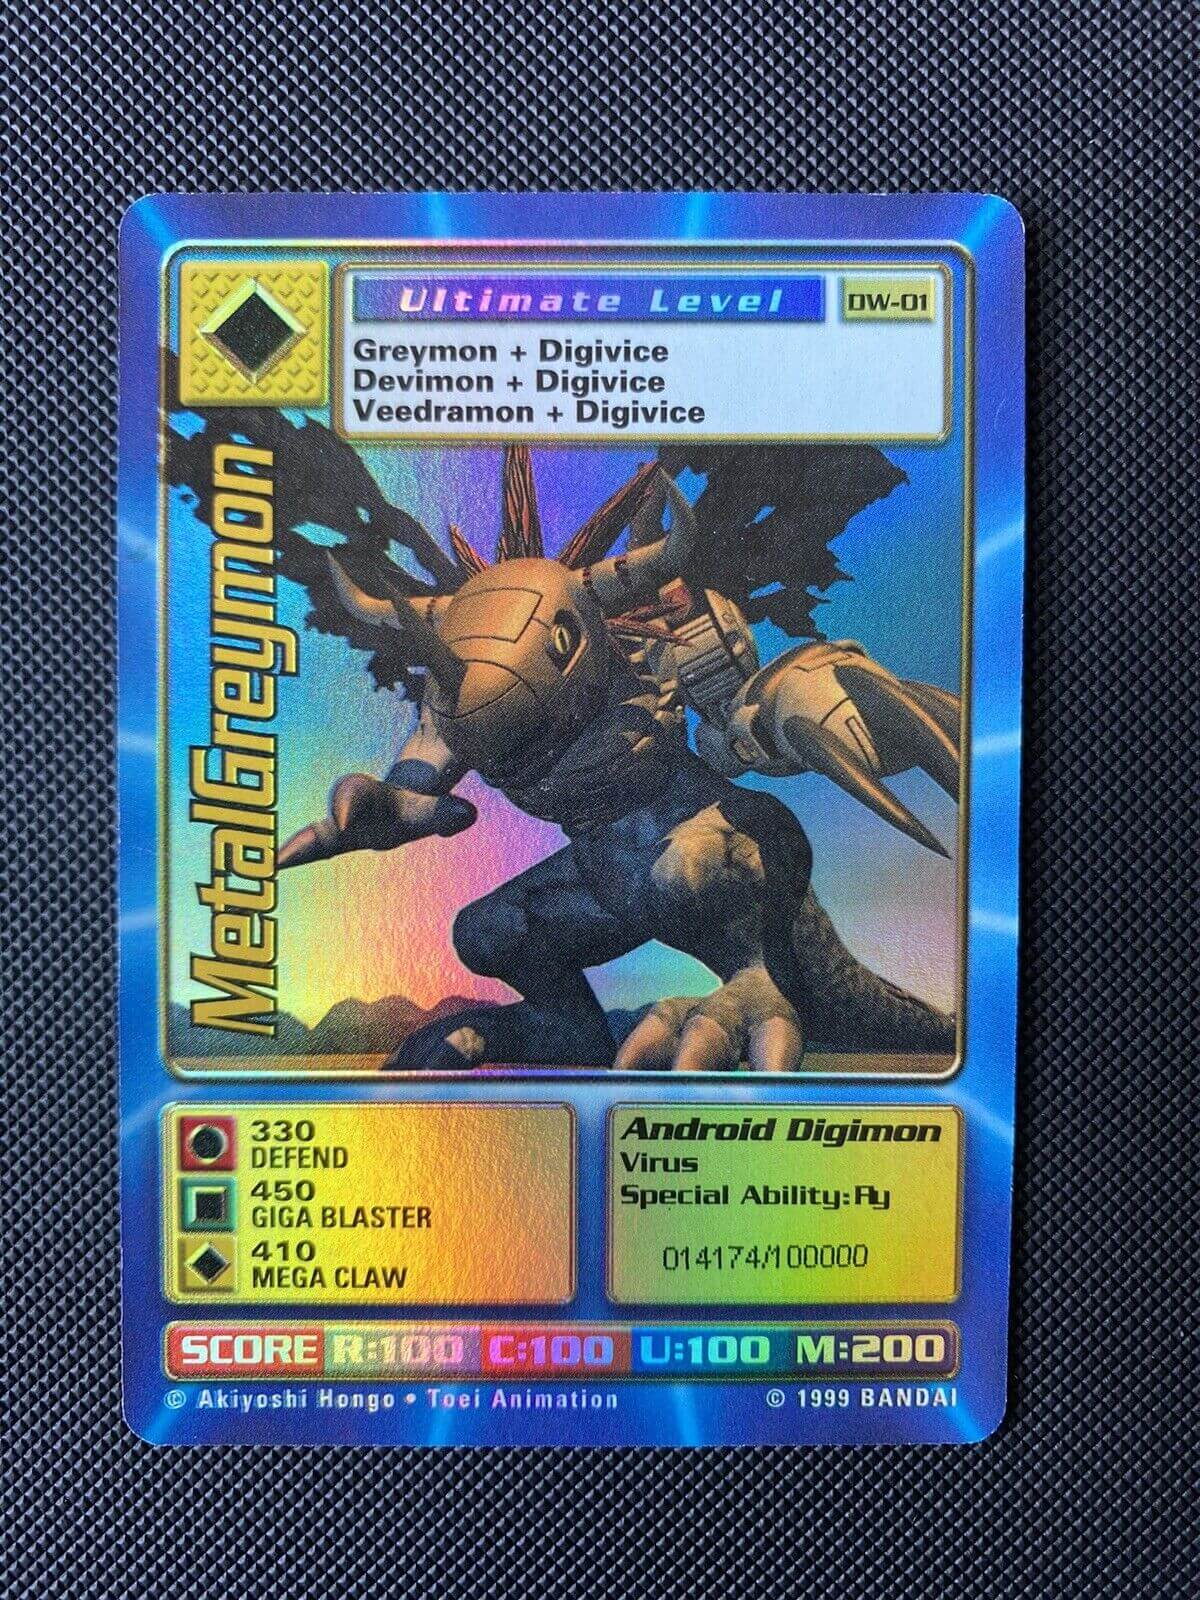 Digimon World PlayStation Promo DW-01 MetalGreymon - number 014174 / 100,000